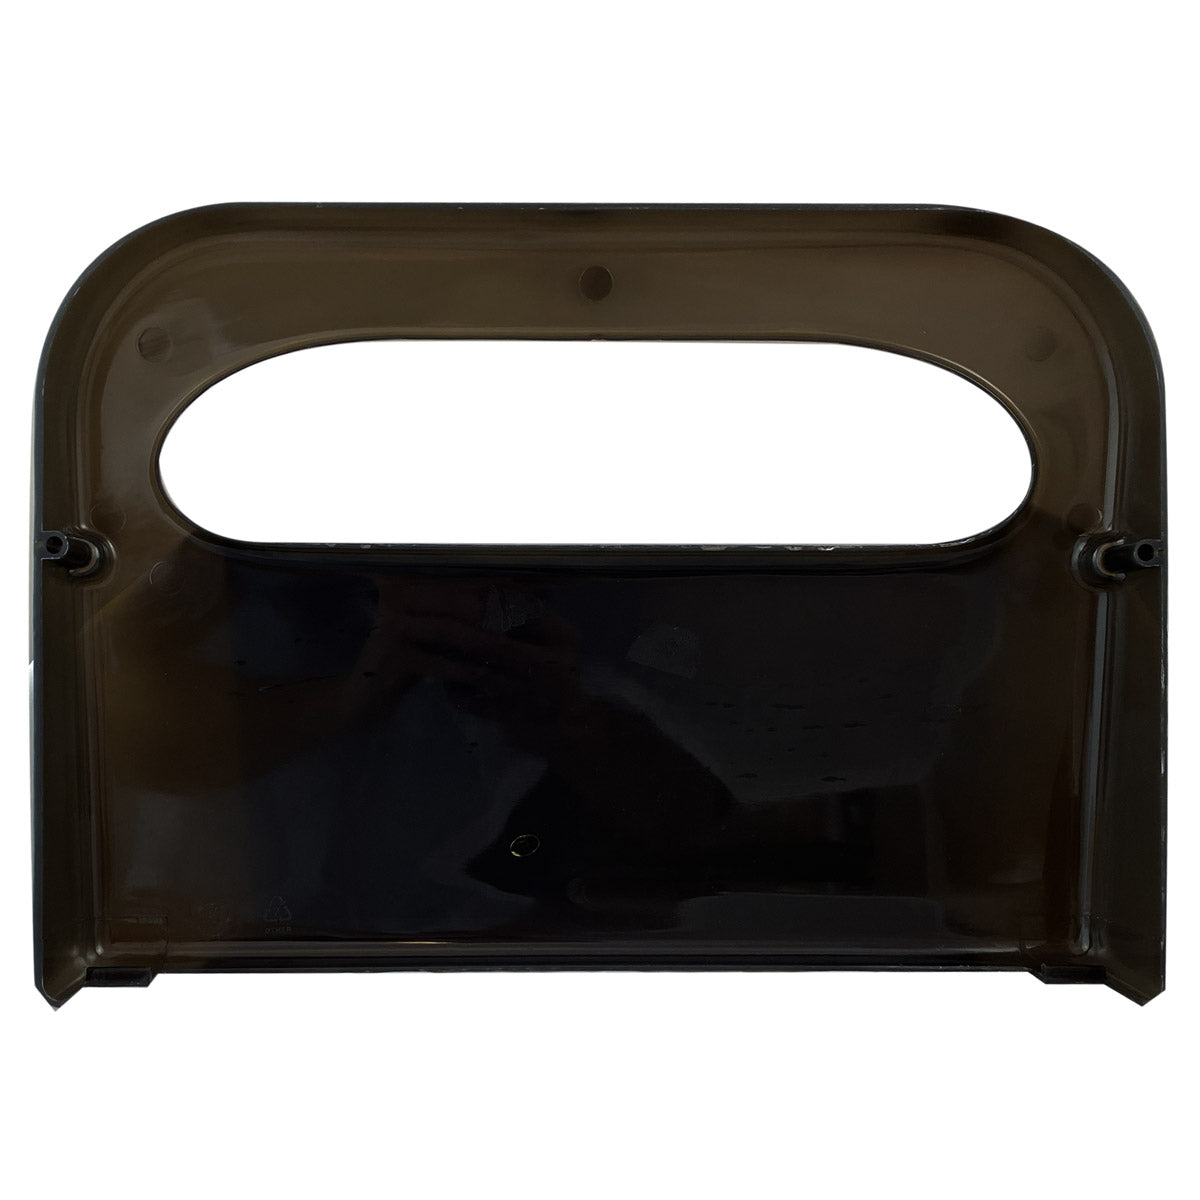 VISTA Seat Cover Dispenser, Dark Translucent - TS4001